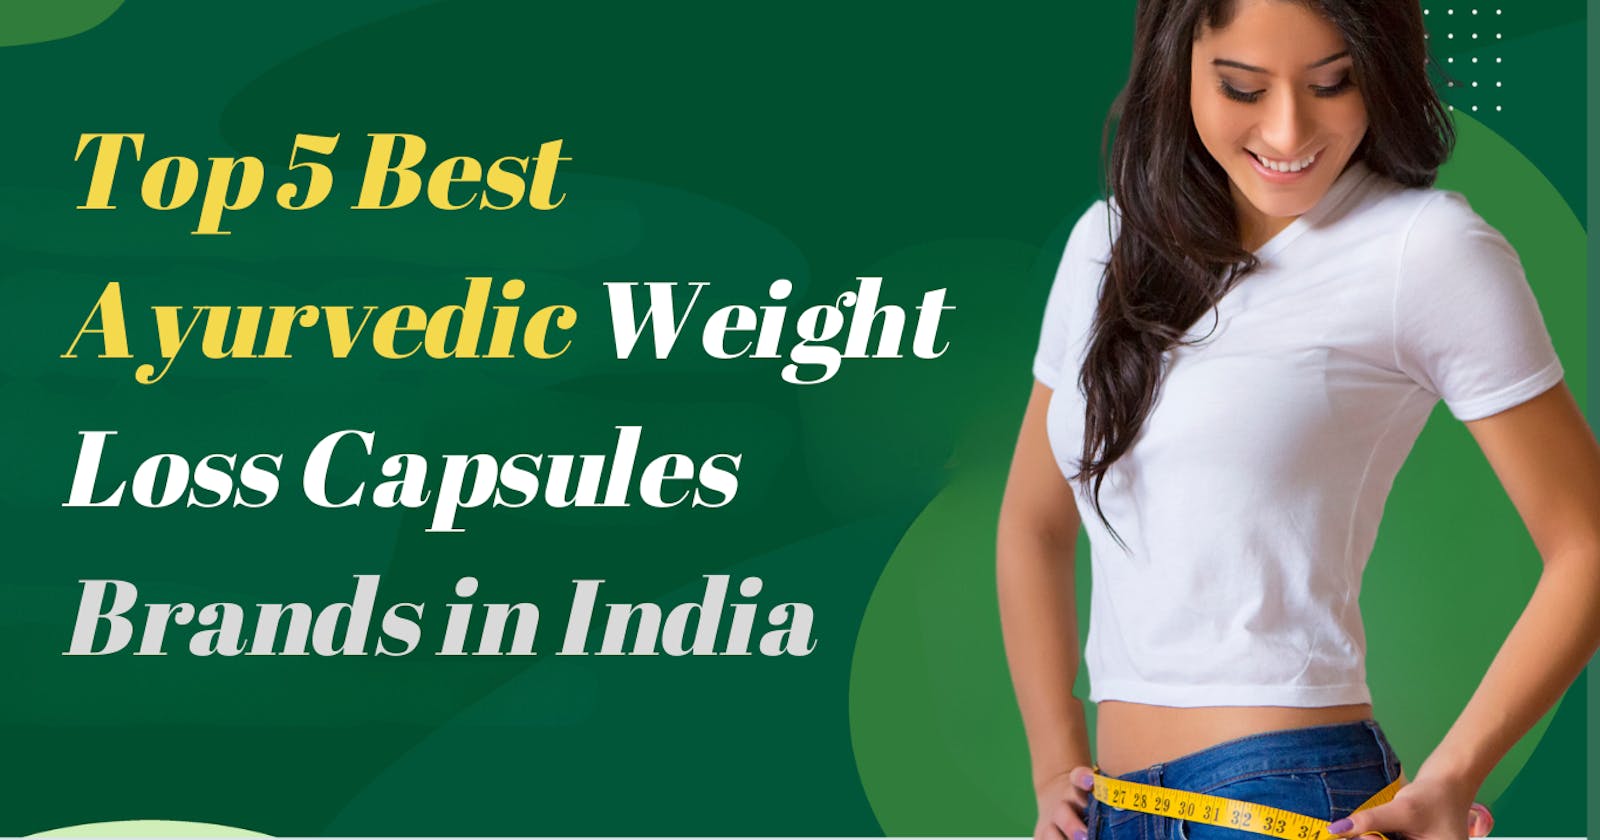 Top 5 Best Ayurvedic Weight Loss Capsules Brands in India